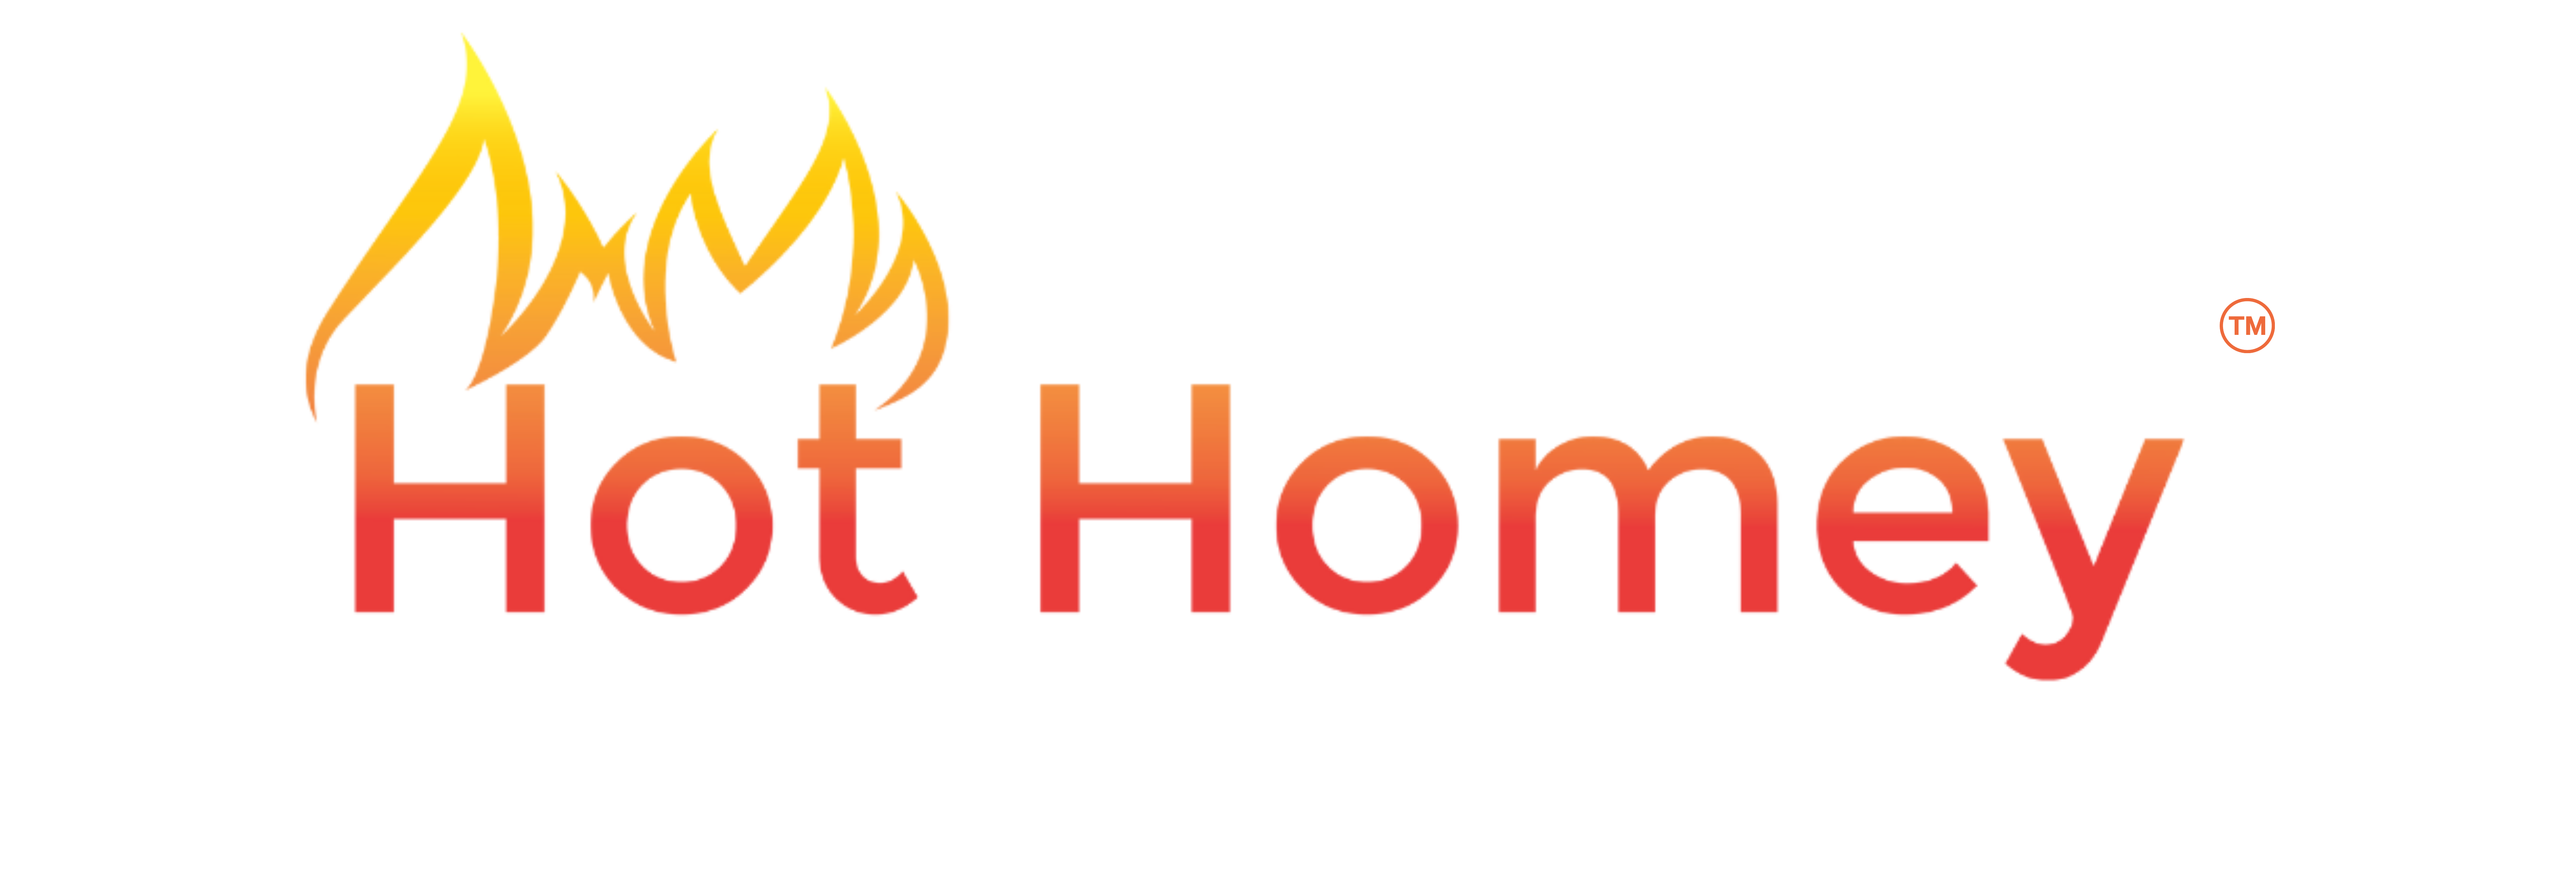 Hot Homey